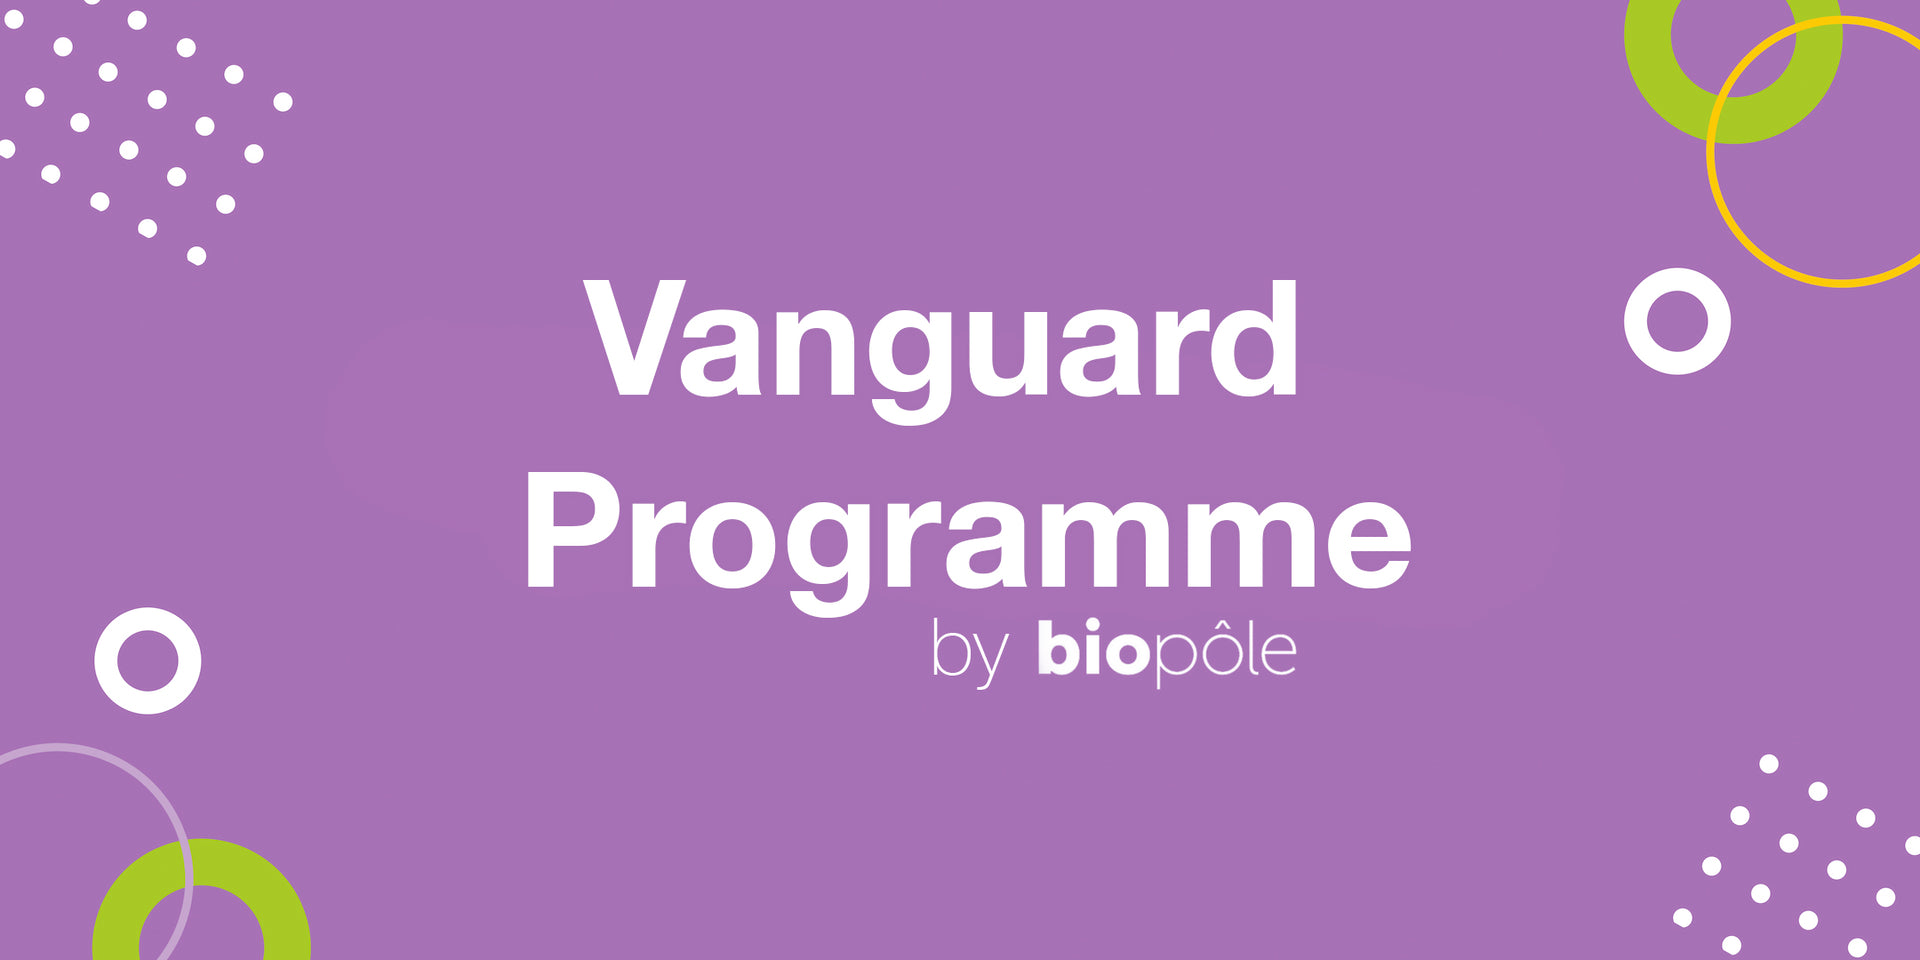 Gabi SmartCare awardee of the Vanguard Programme of the Digital Health Hub!